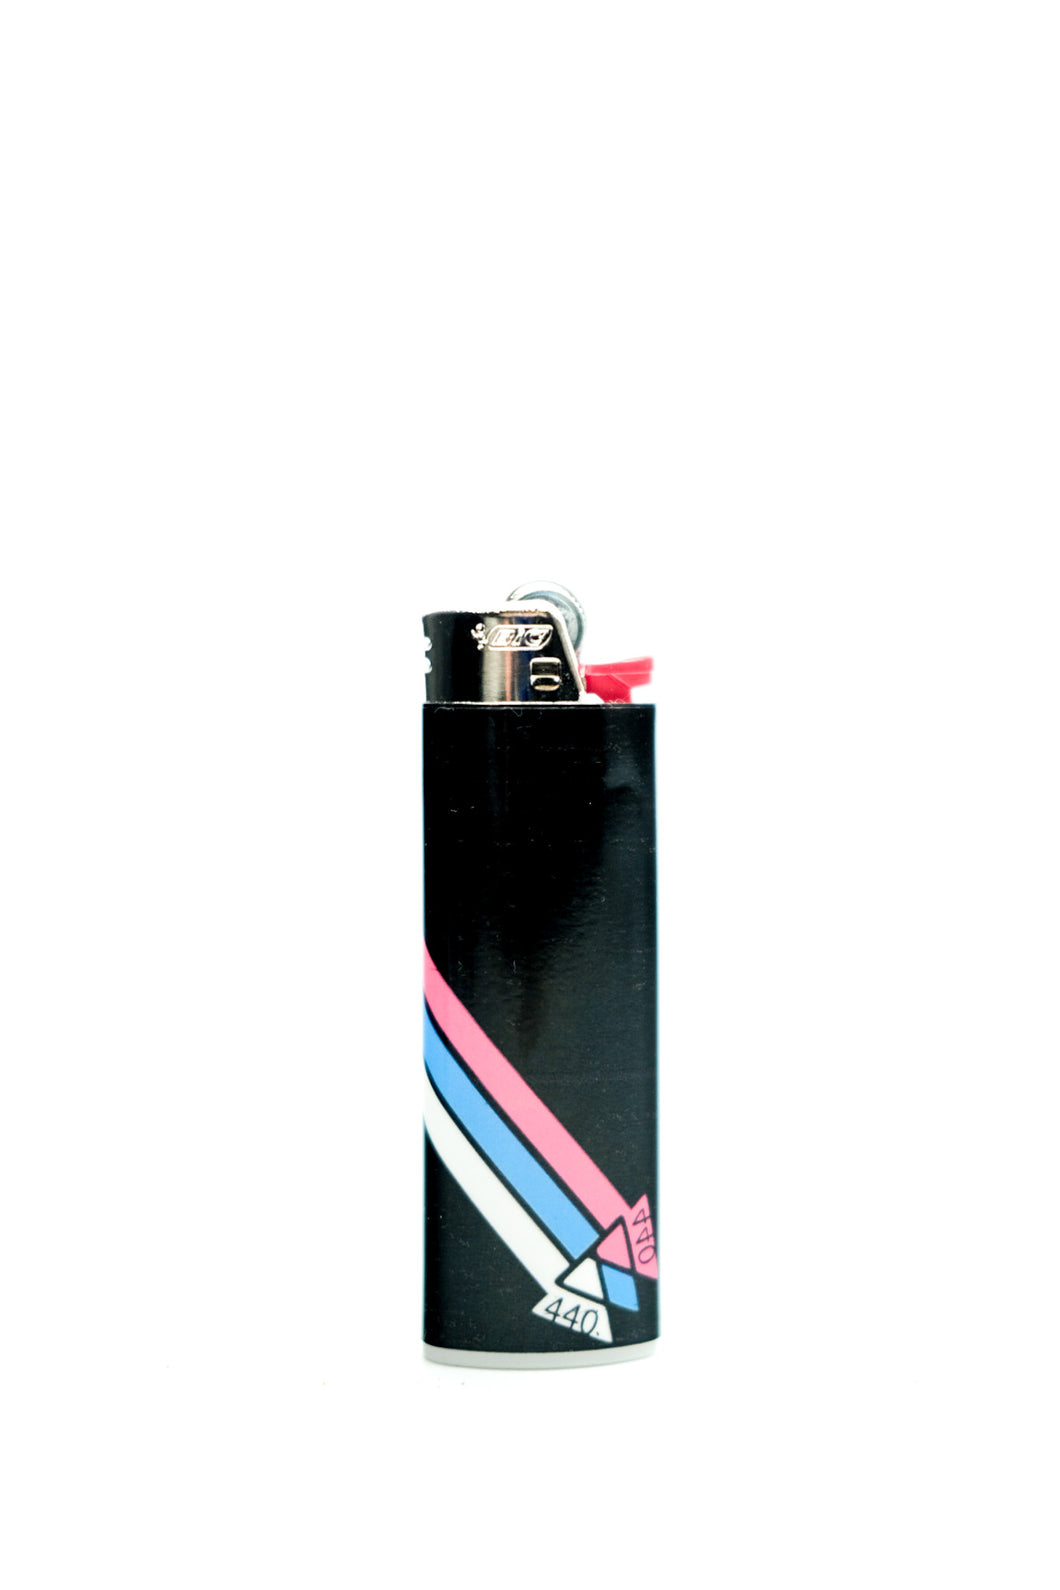 BIC x 440 Lighter - Series 1